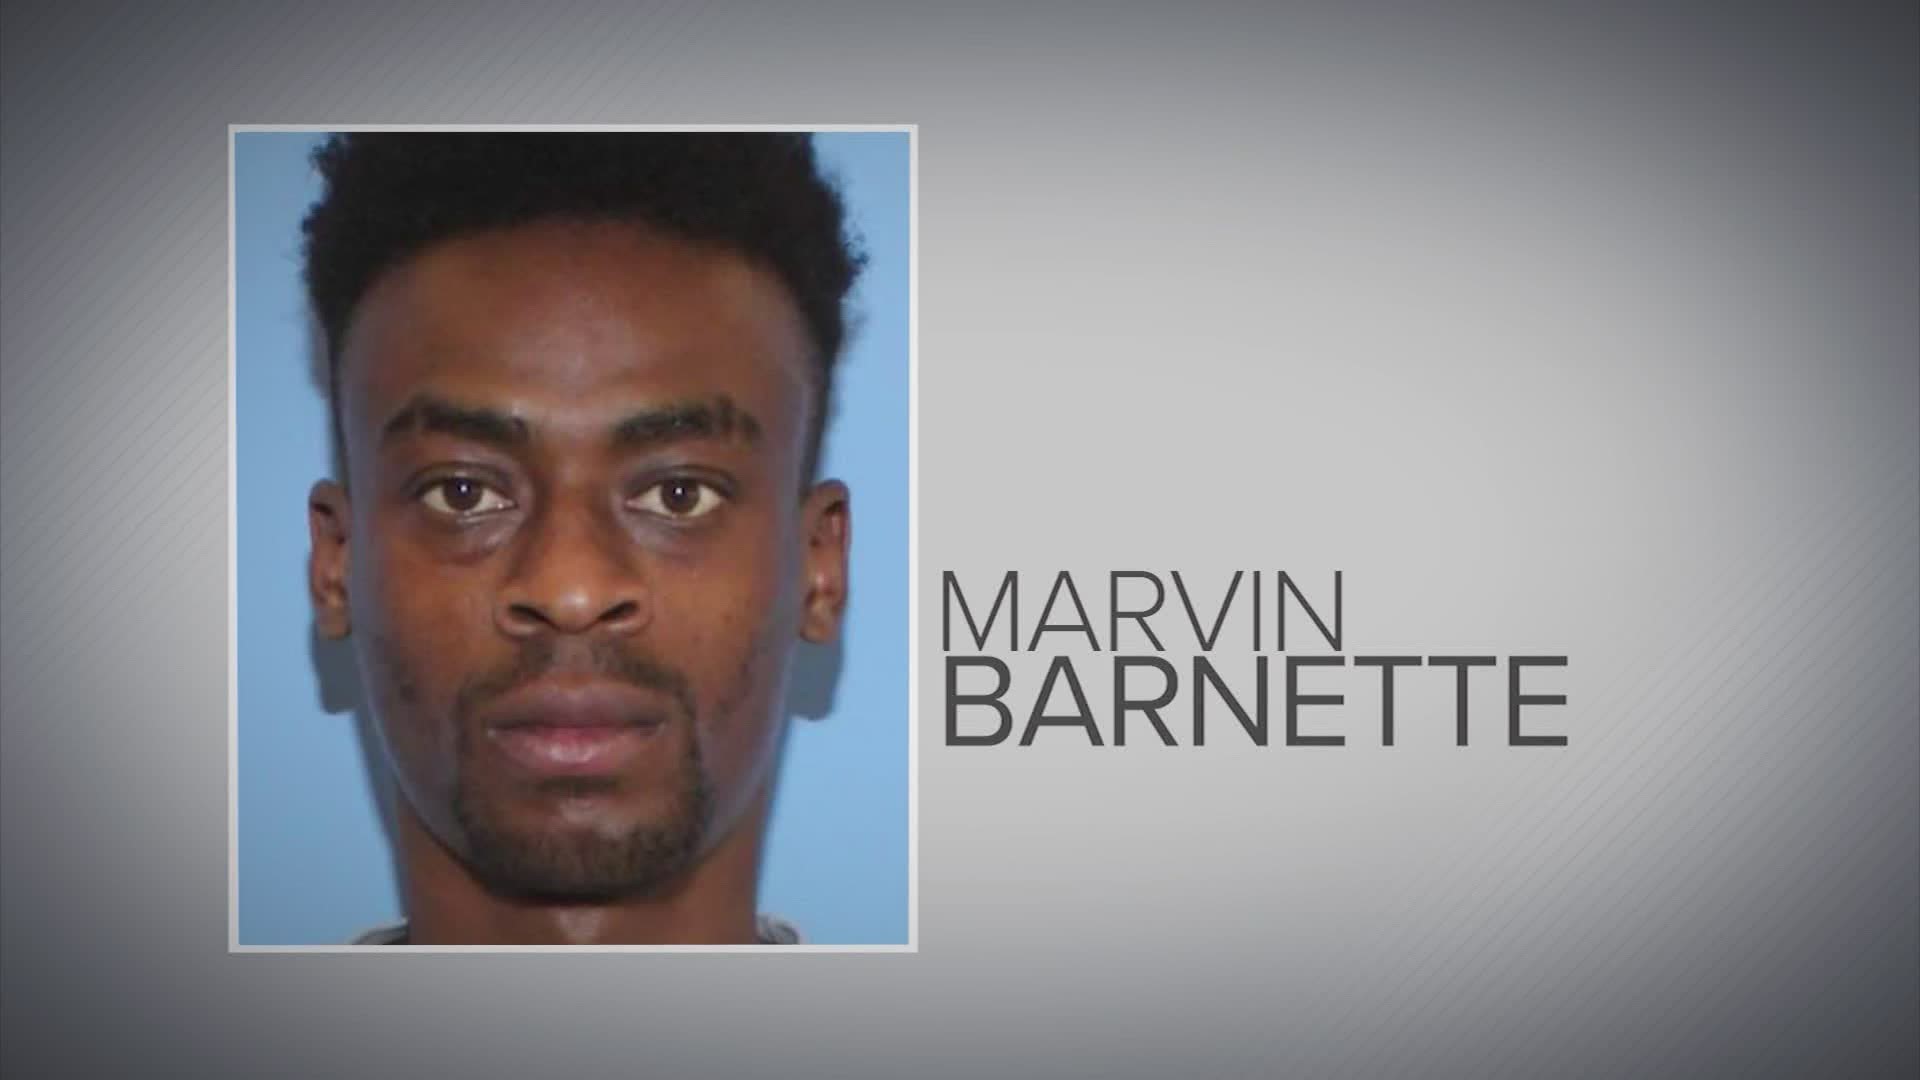 Precinct 4 is searching for Marvin Barnette, 33